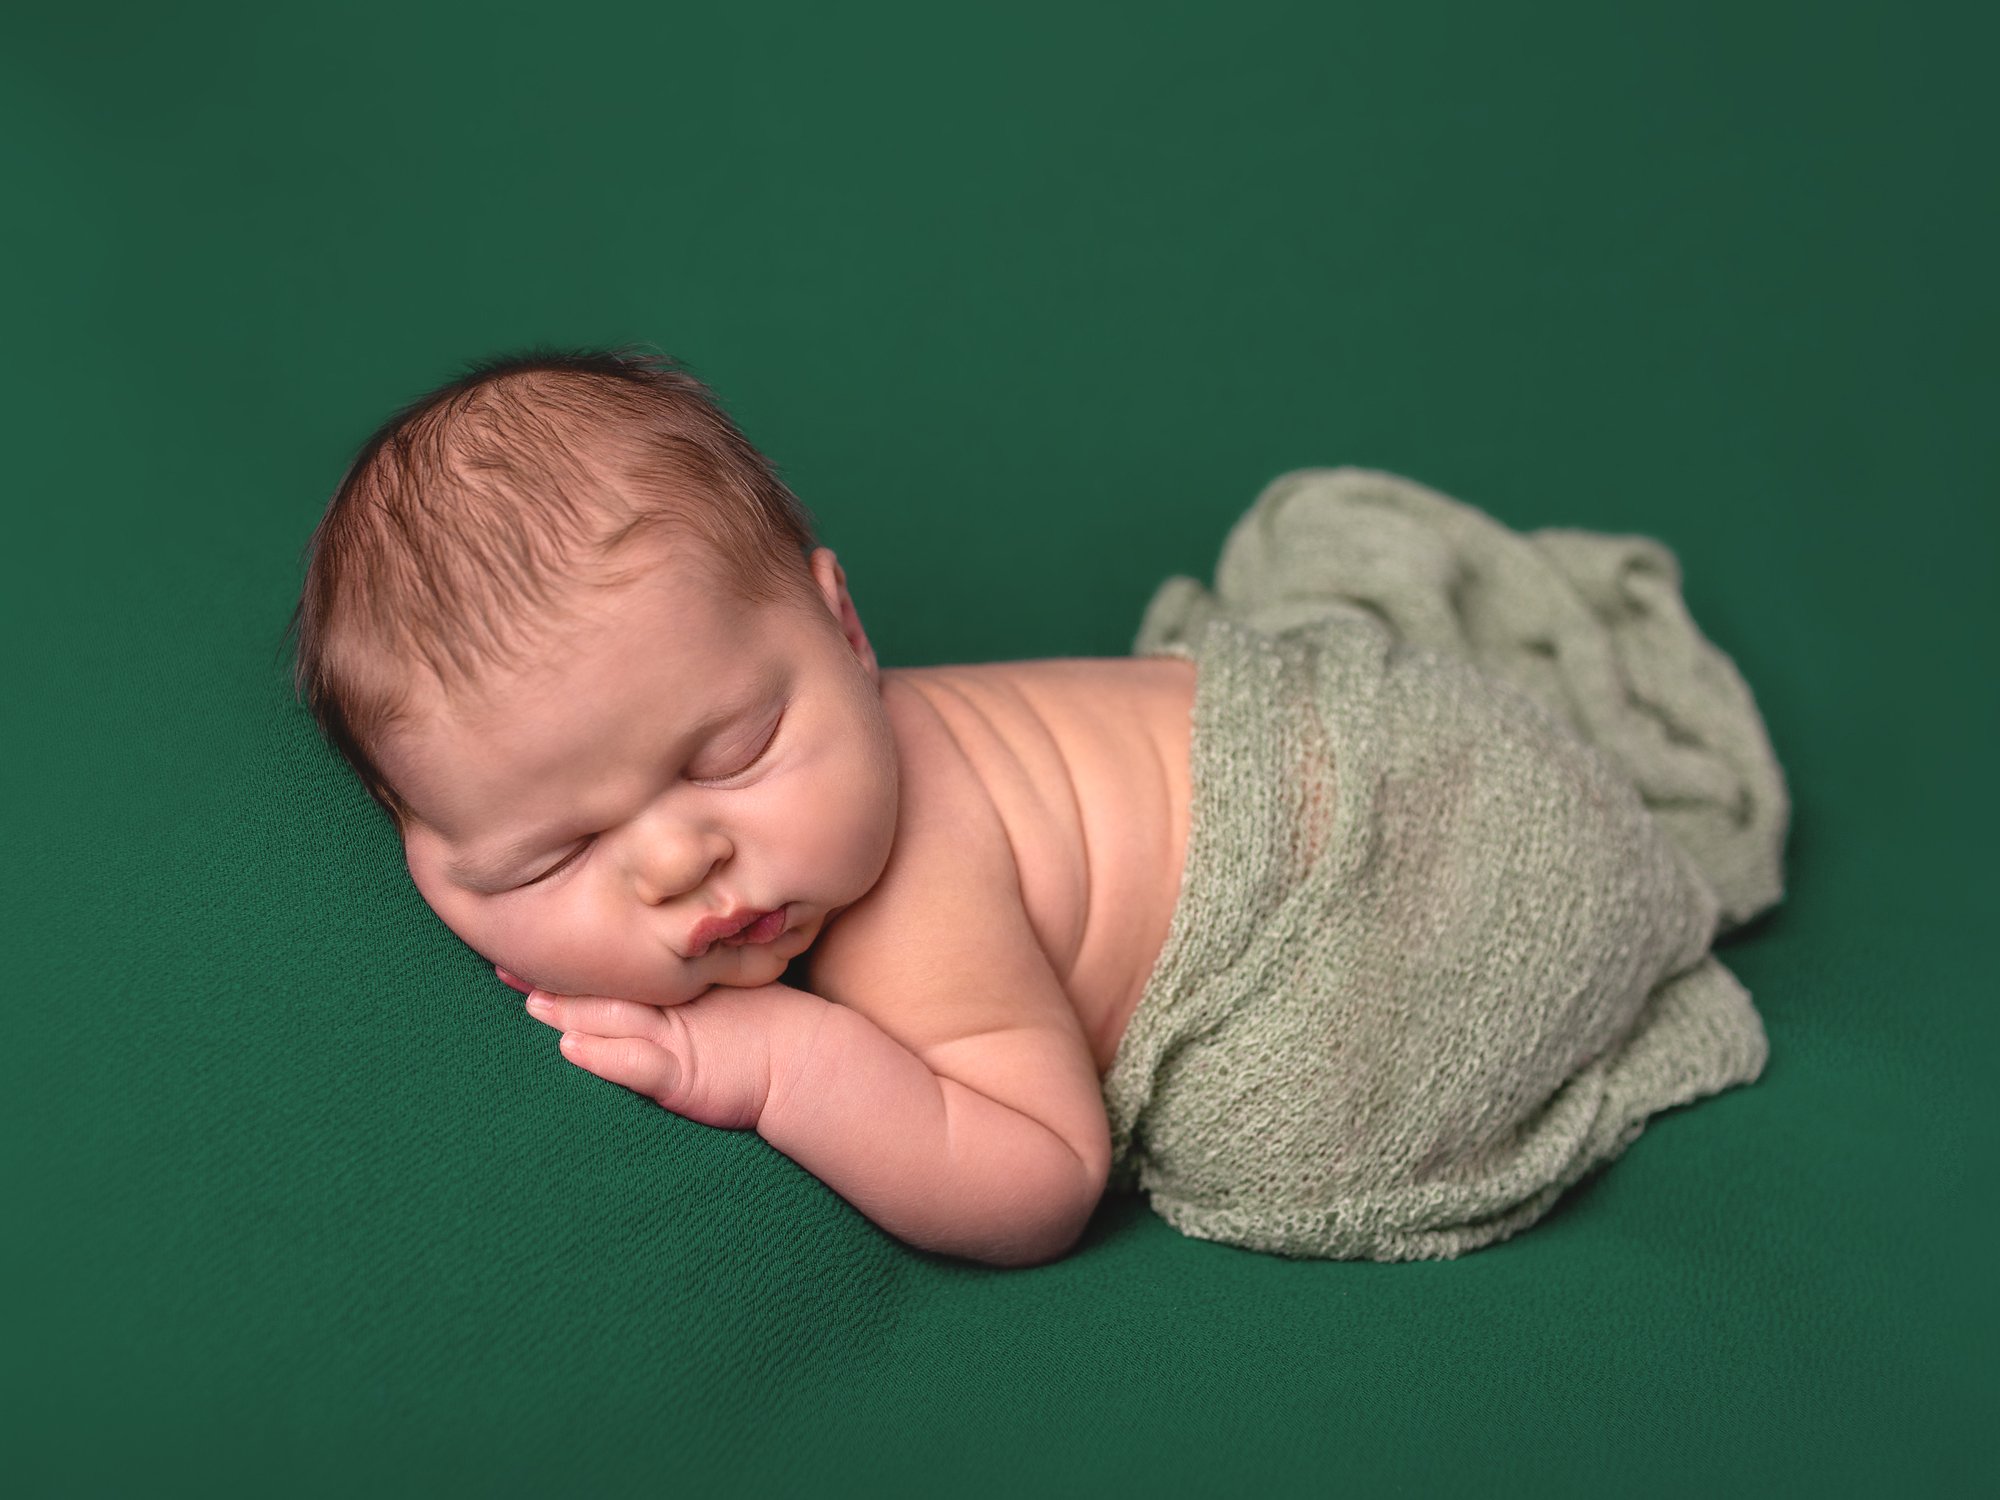  Newborn and baby photographer south wales, cardiff, newport, caerphilly, bridgend, rhondda cynon taf 